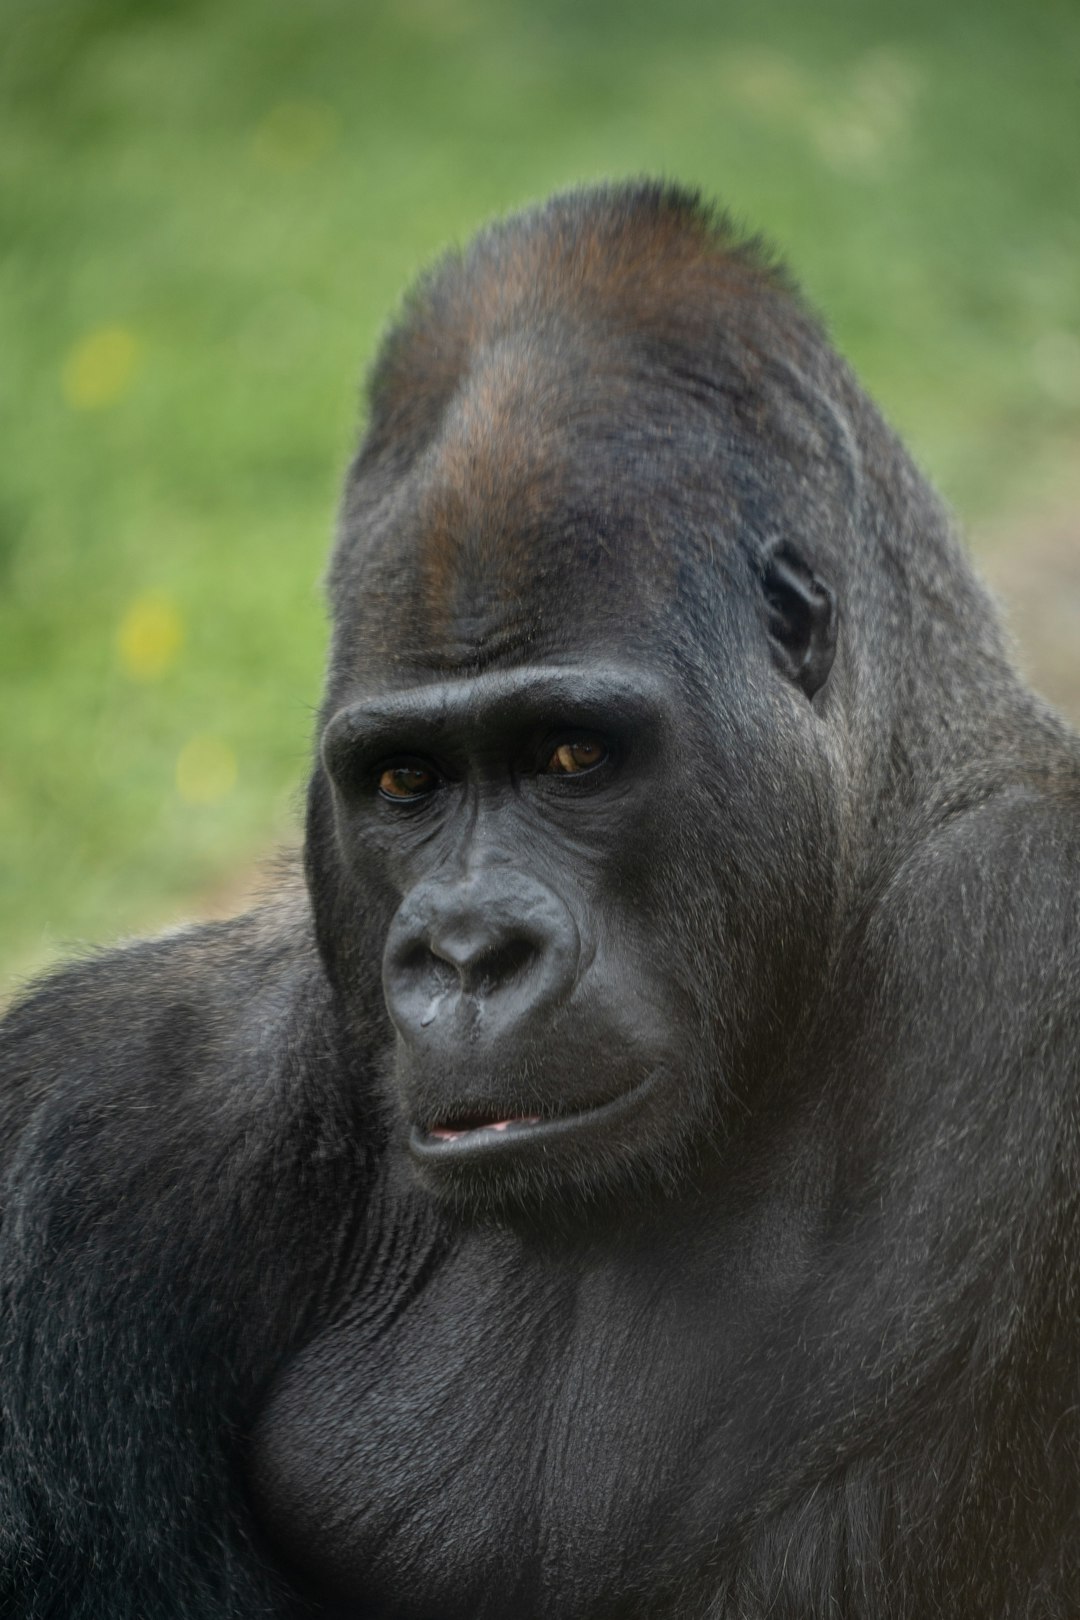  black gorilla in close up photography during daytime gorilla